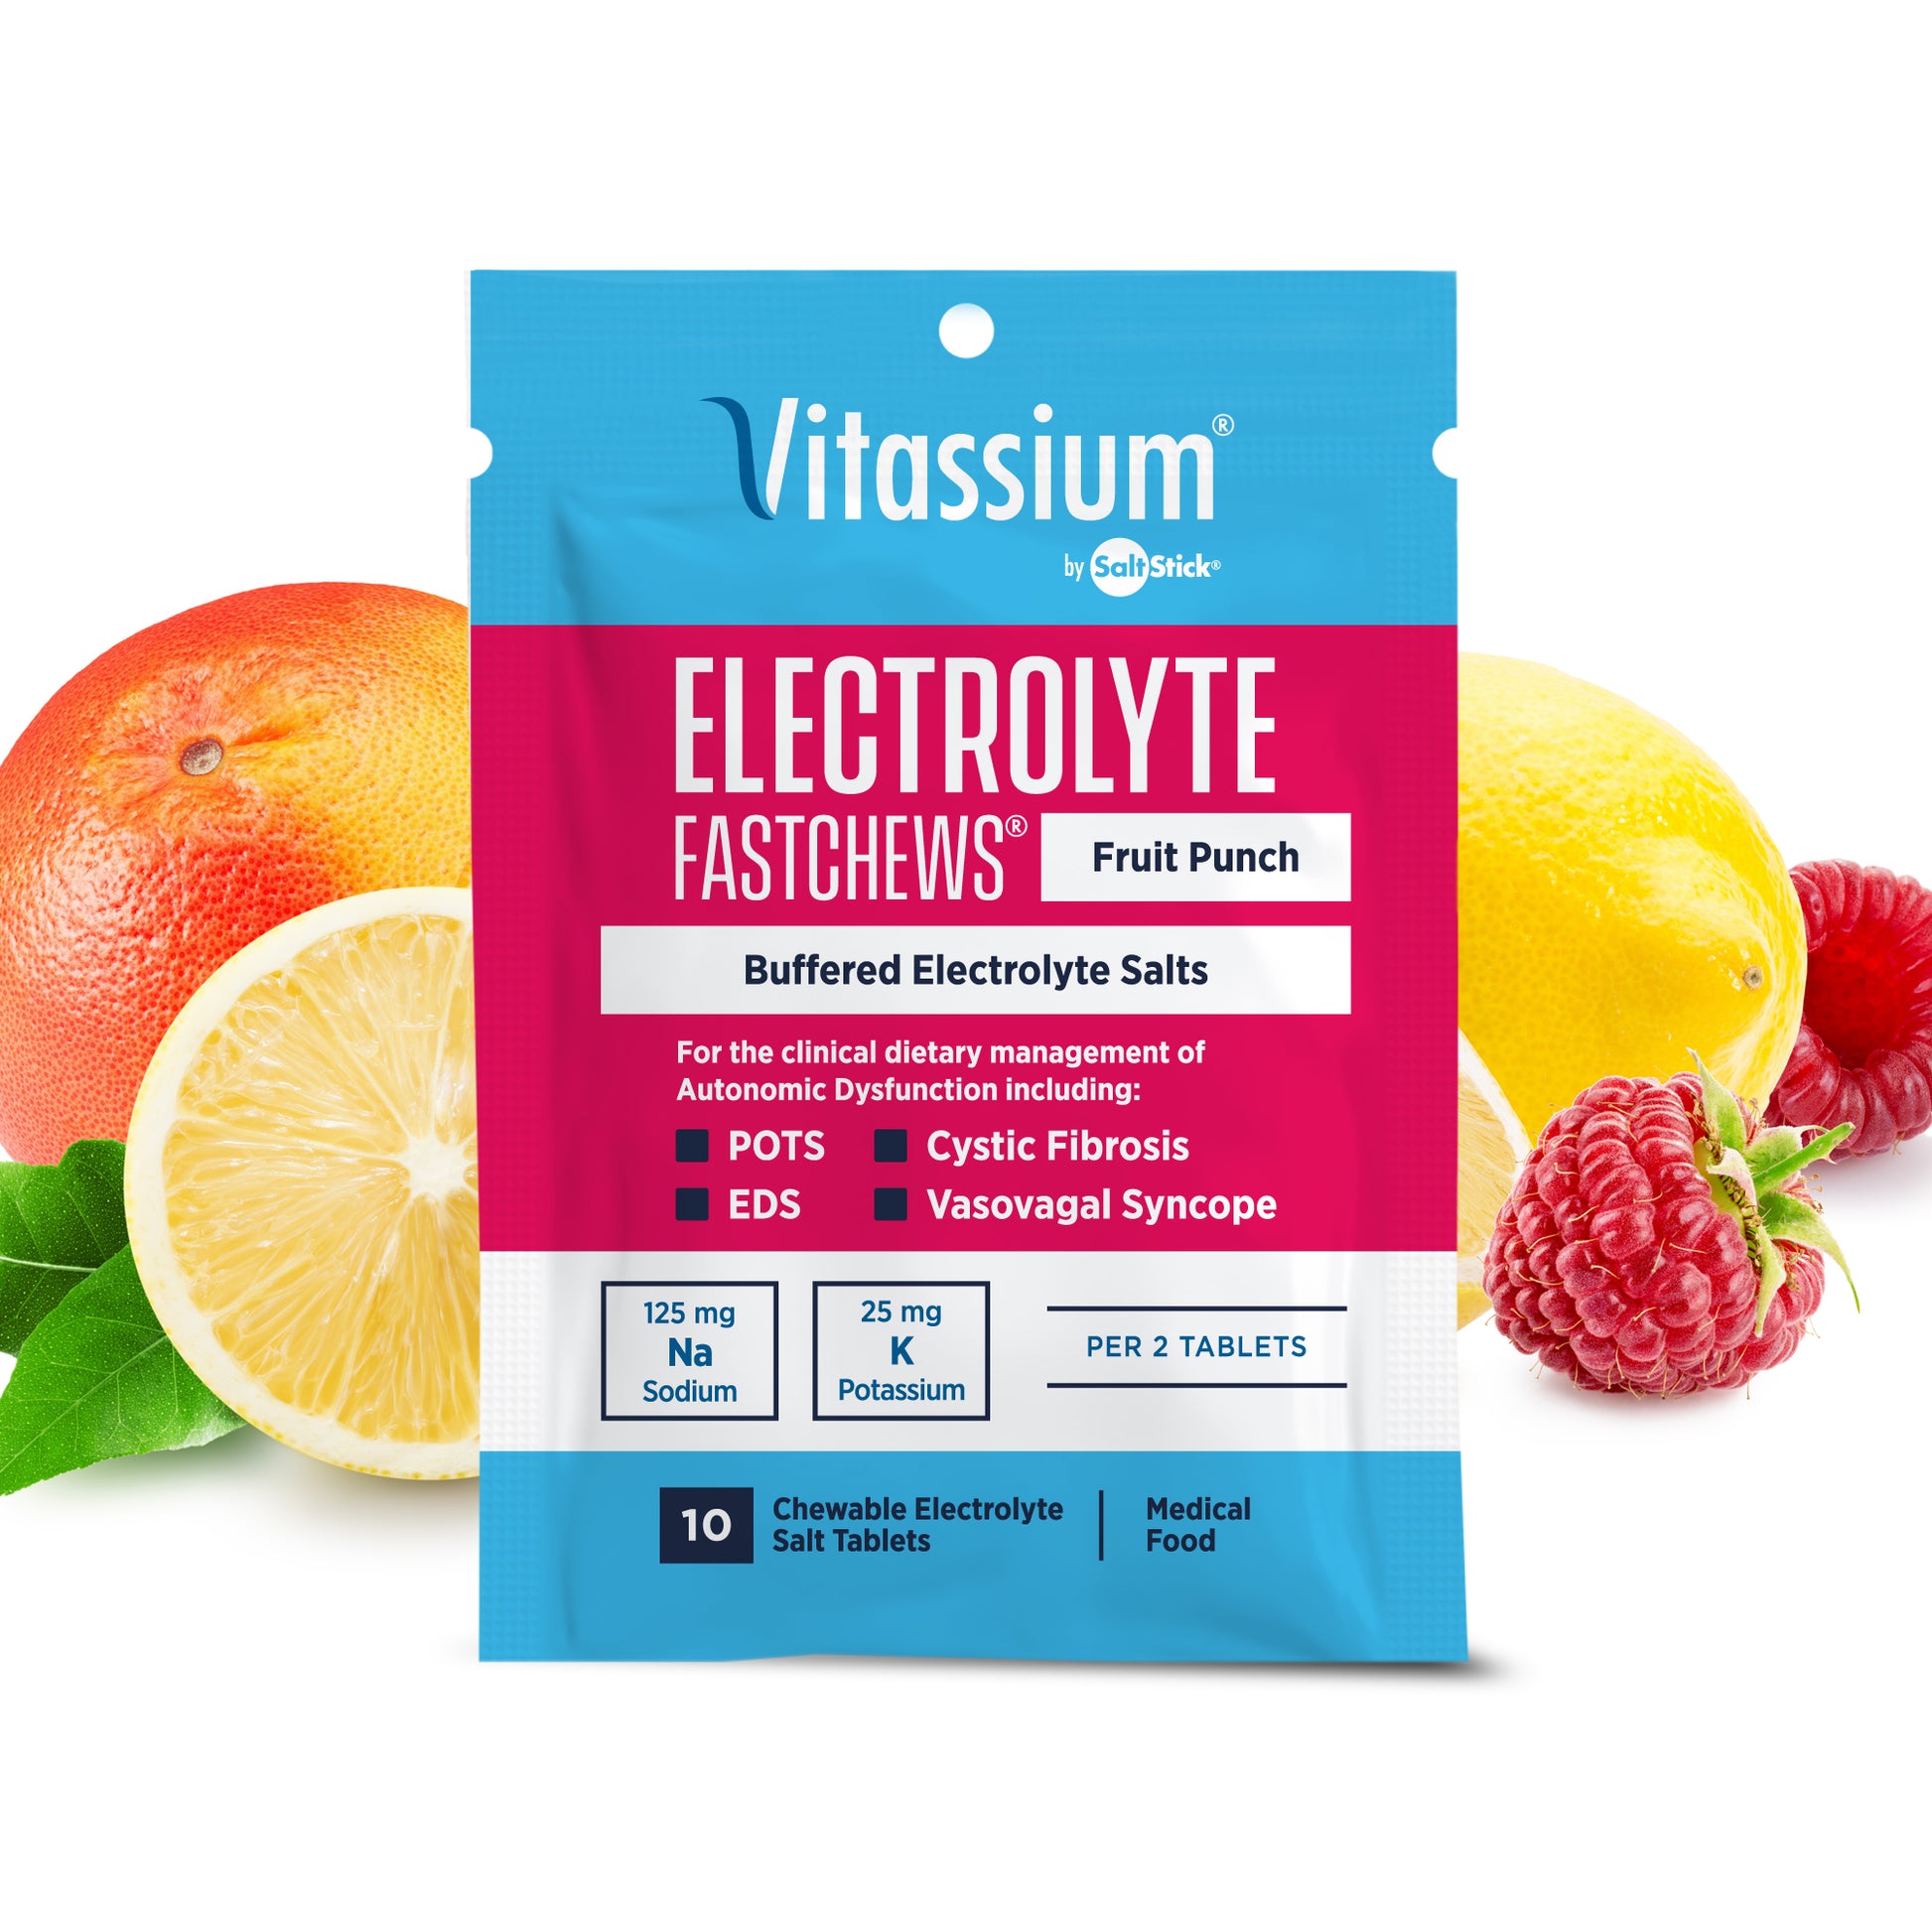 Vitassium FastChews Chewable Electrolyte Salt Tablets Fruit Punch Packet of 10